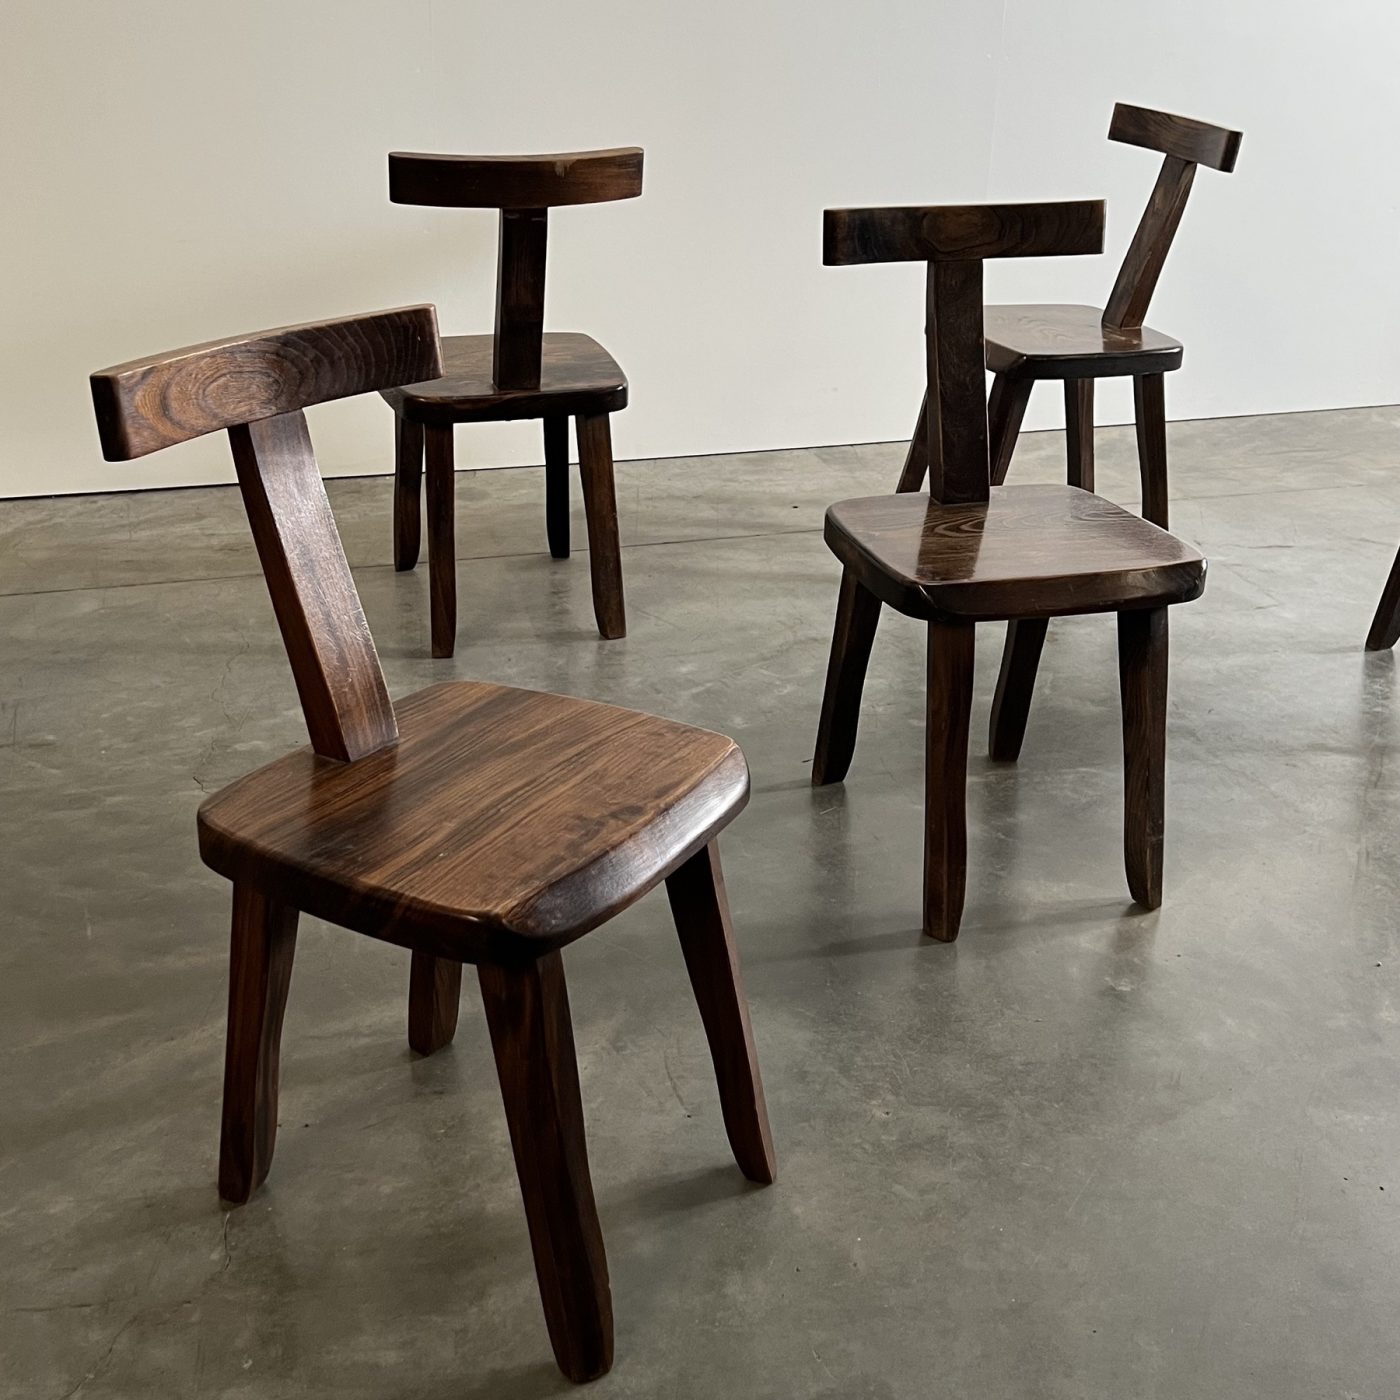 objet-hanninen-chairs0000